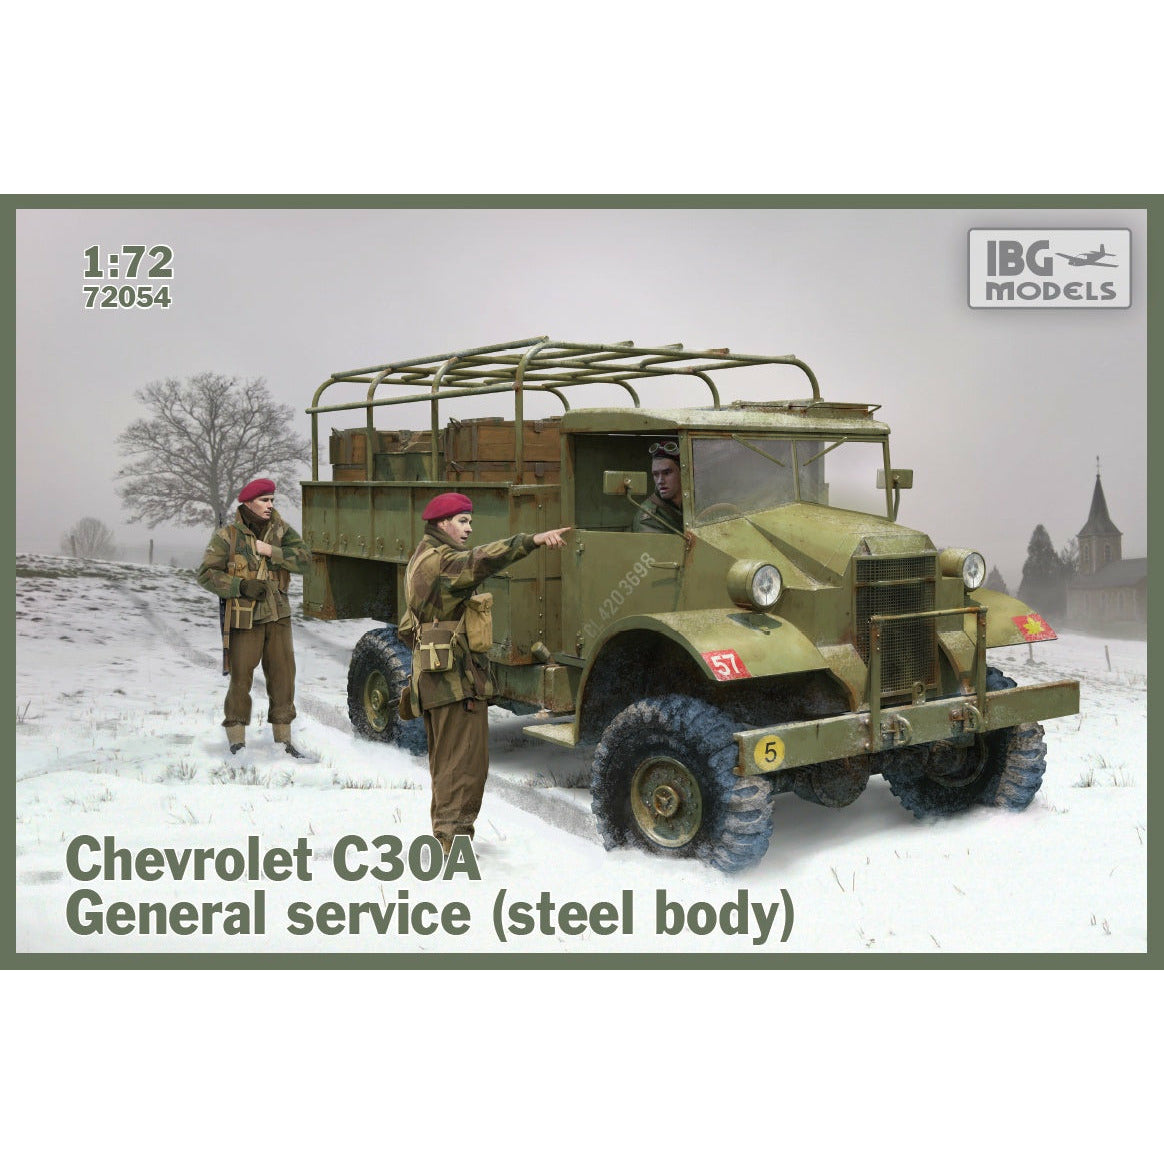 Chevrolet C30A General Service (Steel Body) 1/72 #72054 by IBG Models